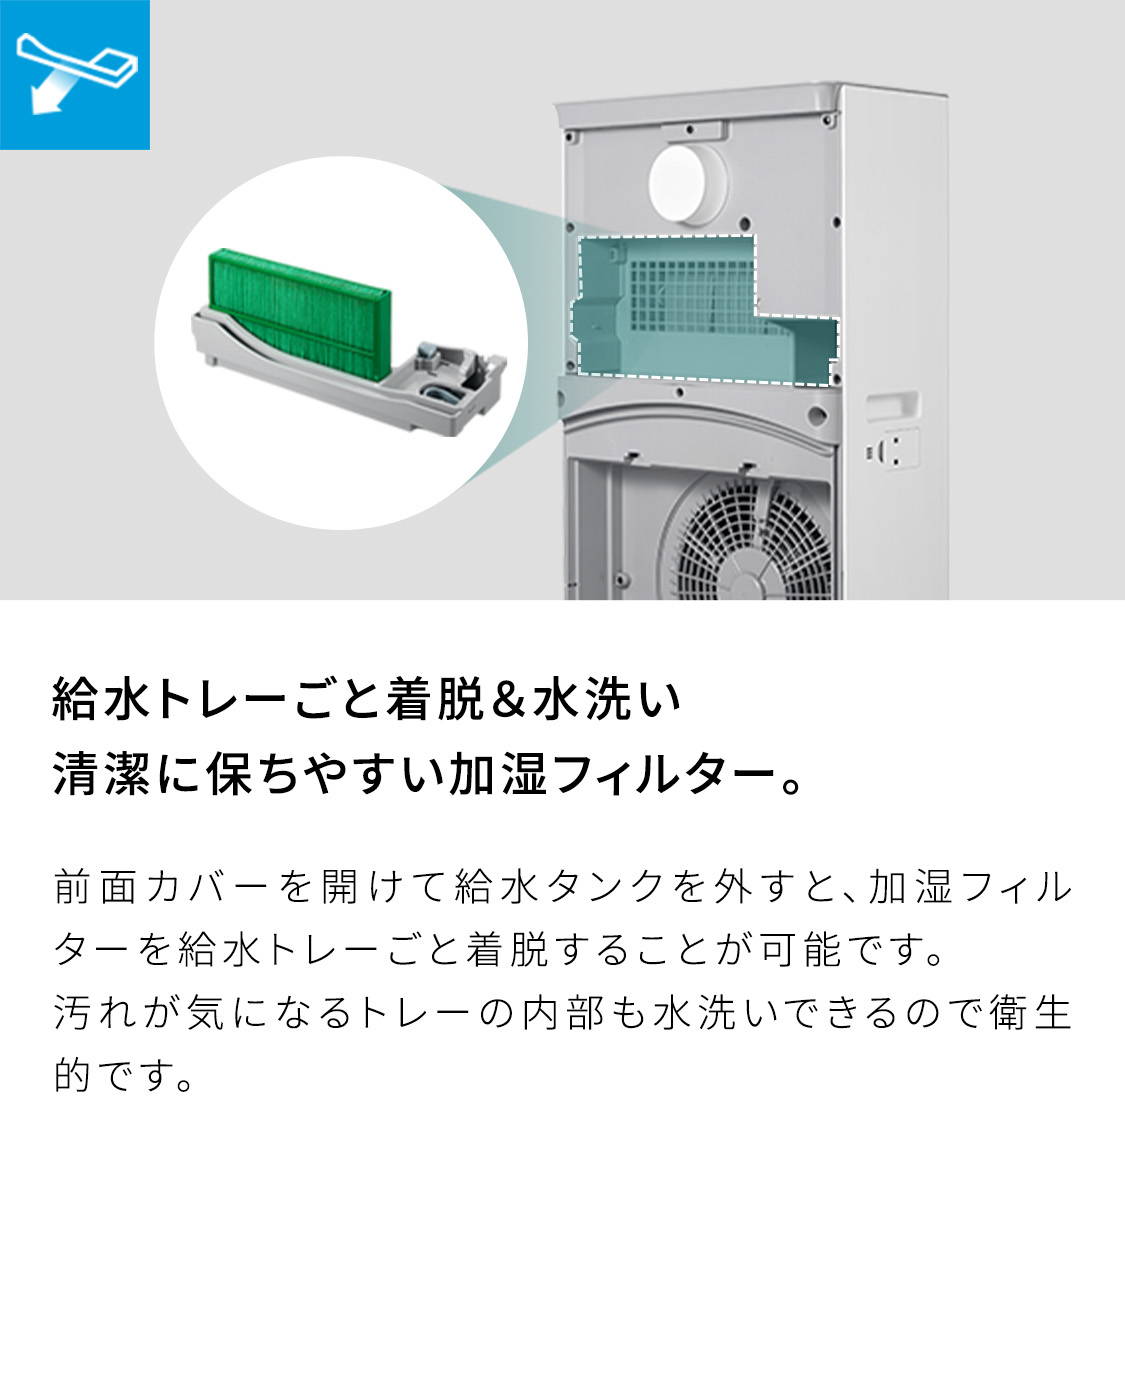 AIRMEGA 250H 製品情報 Products COWAY JAPAN 公式サイト